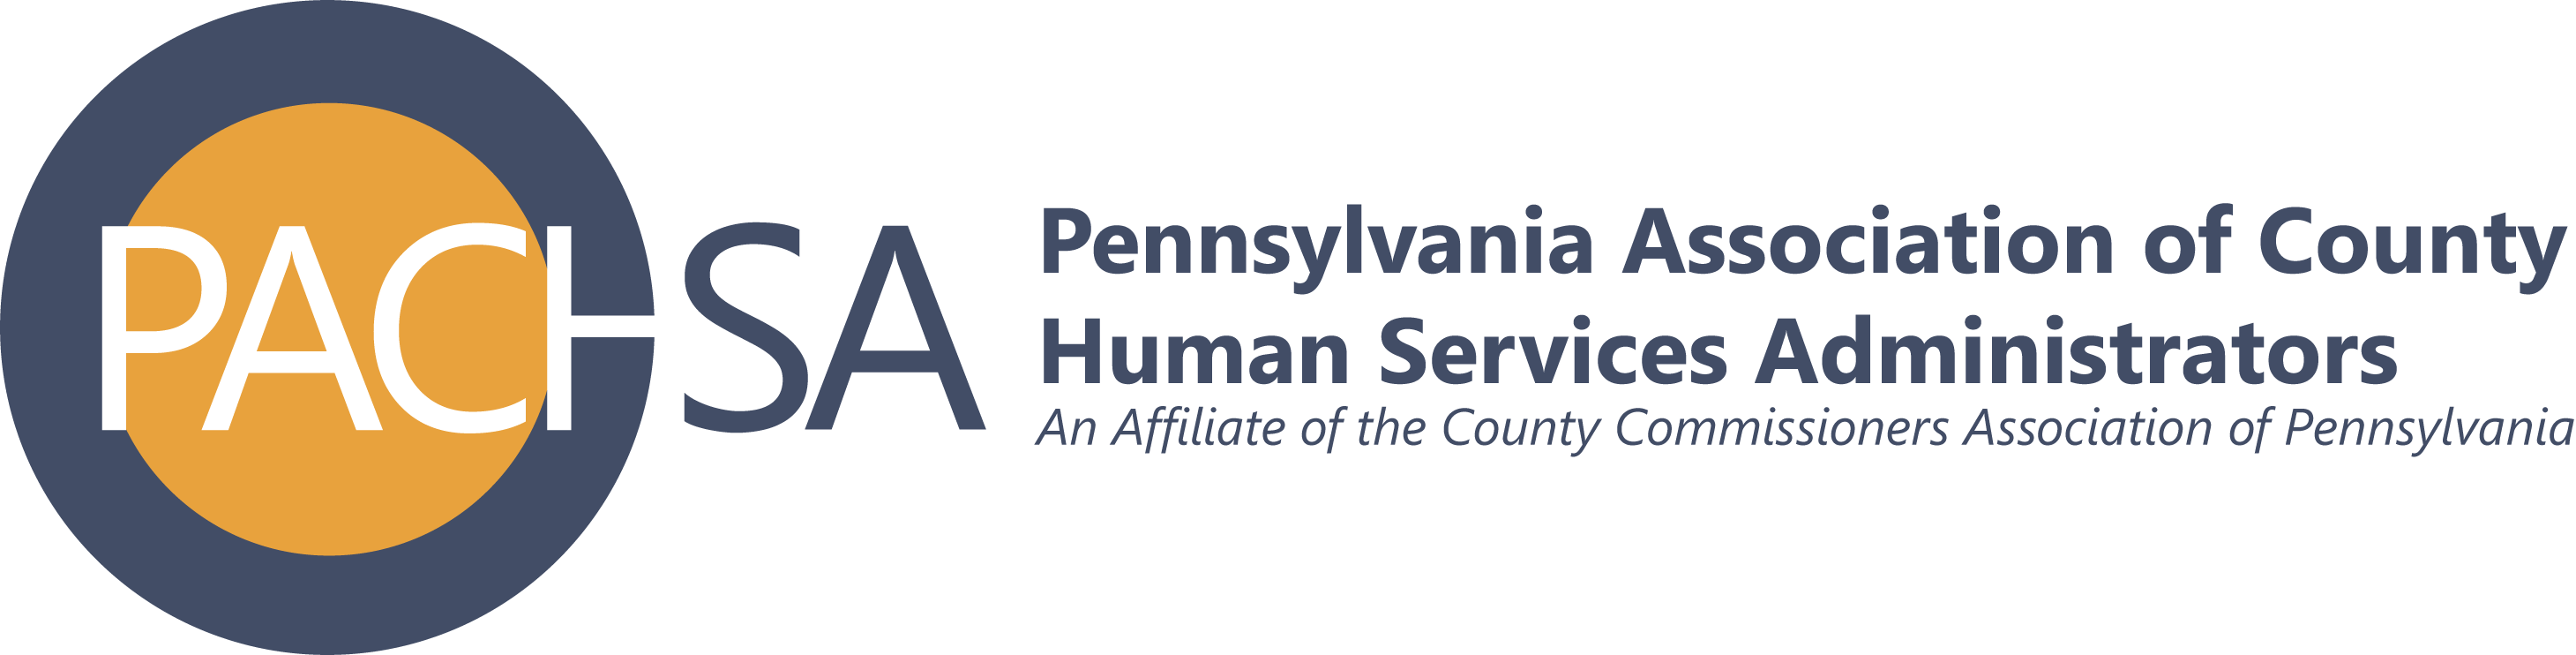 Pennsylvania Association of County Human Services Administrators Logo